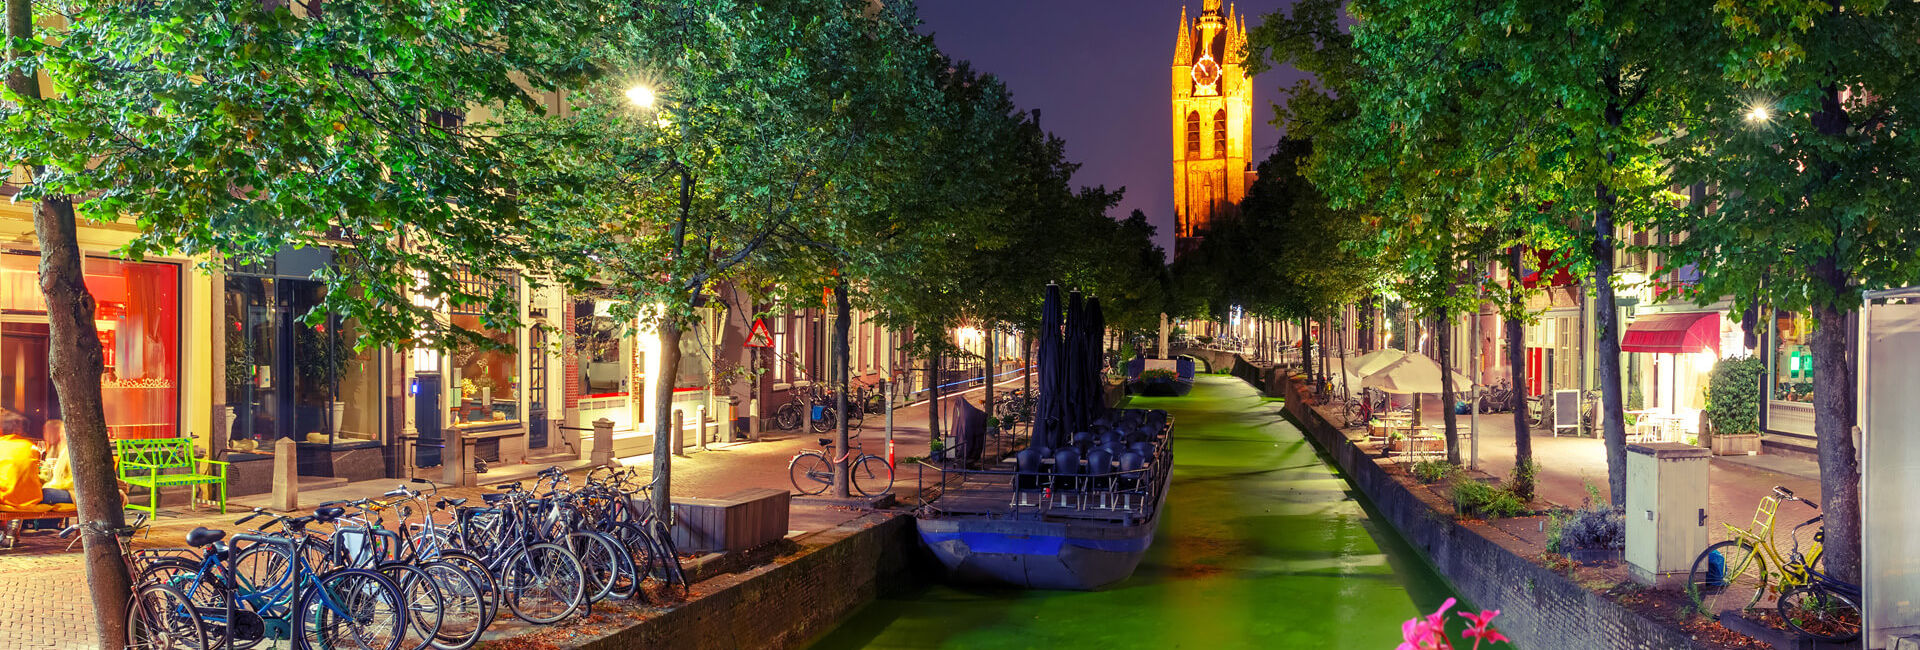 Old church in lights - Explore Delft